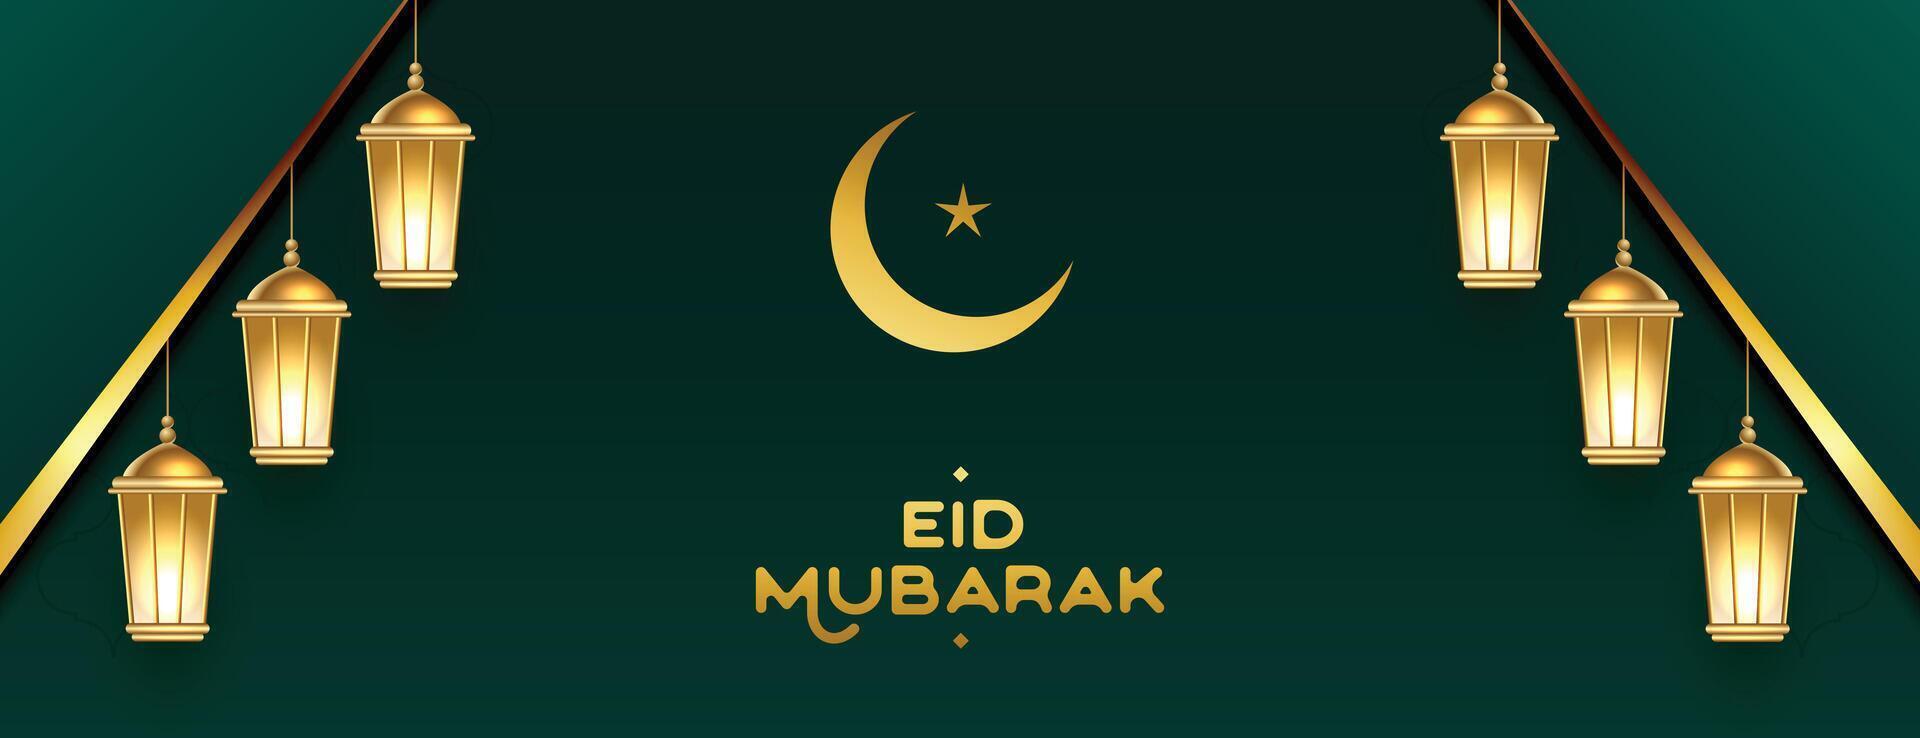 realistic eid mubarak islamic lantern decorative banner vector